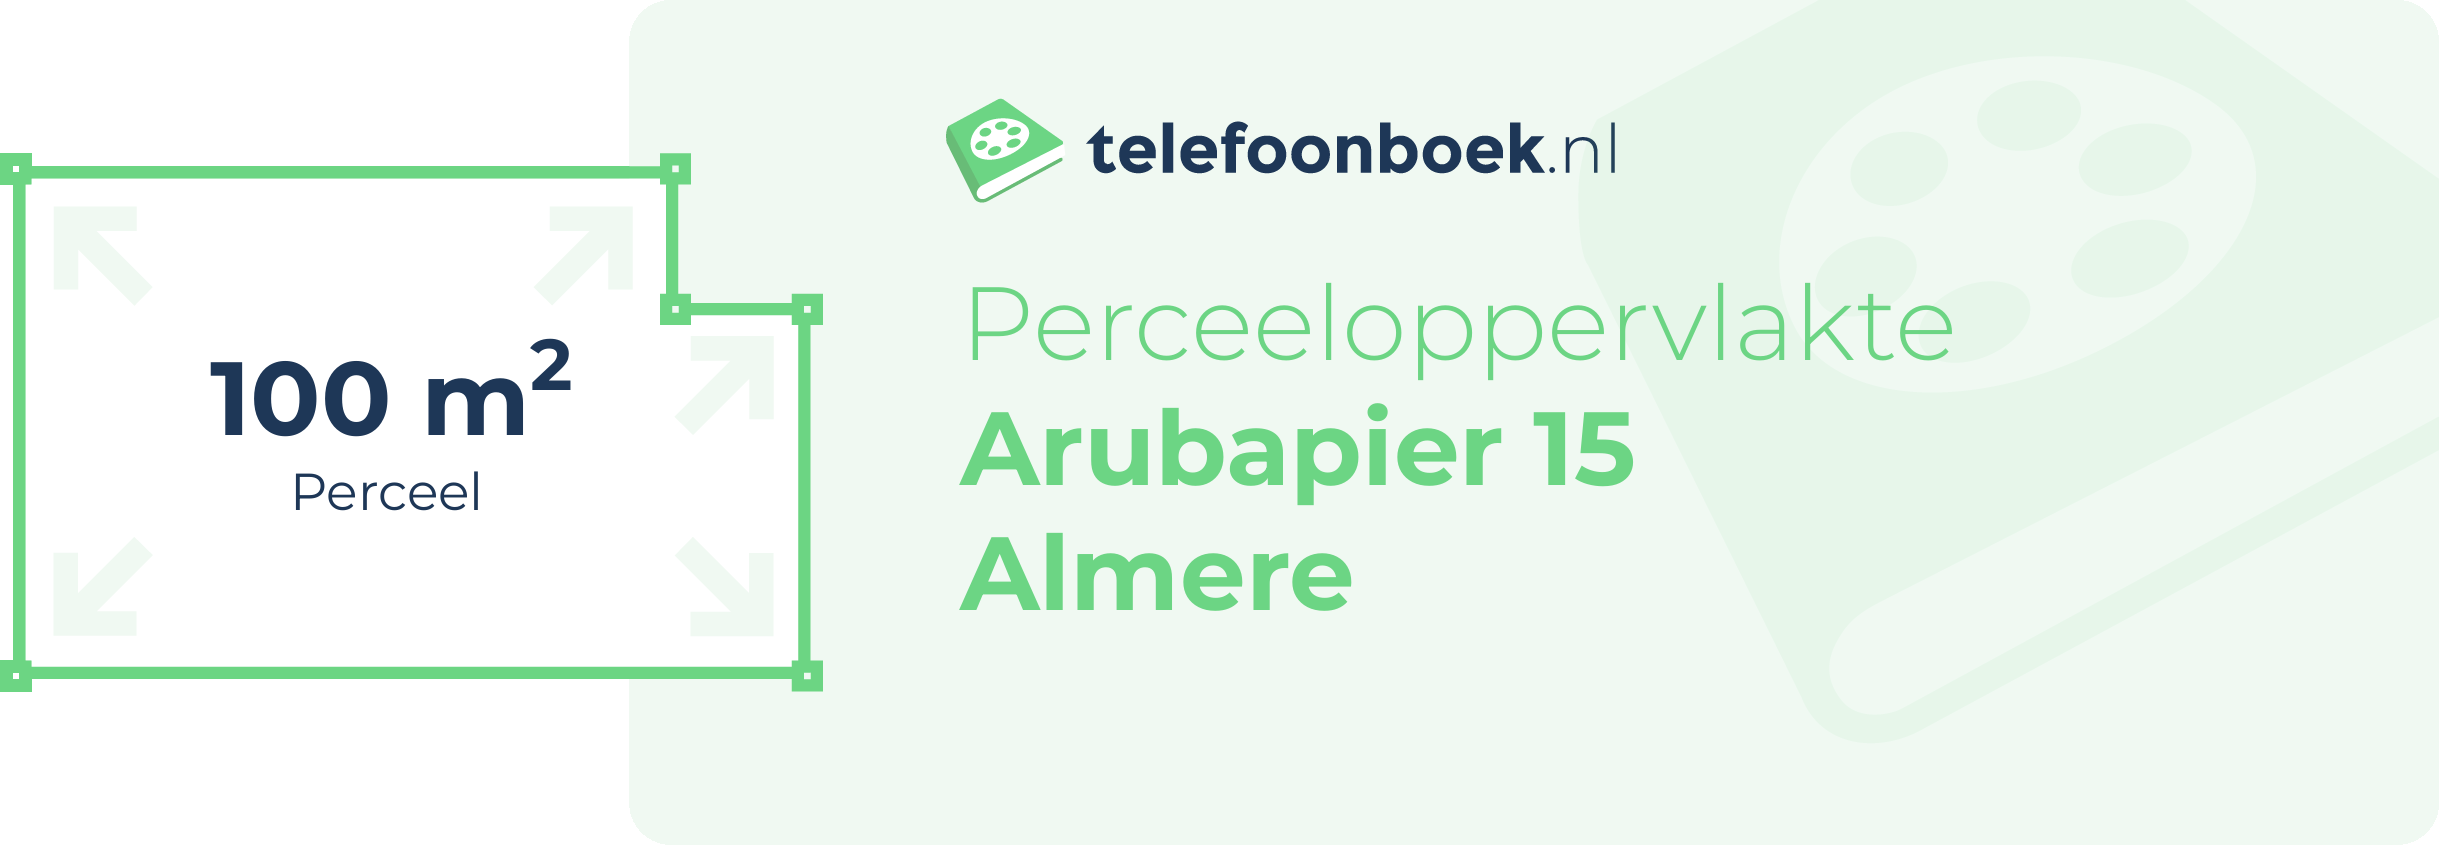 Perceeloppervlakte Arubapier 15 Almere